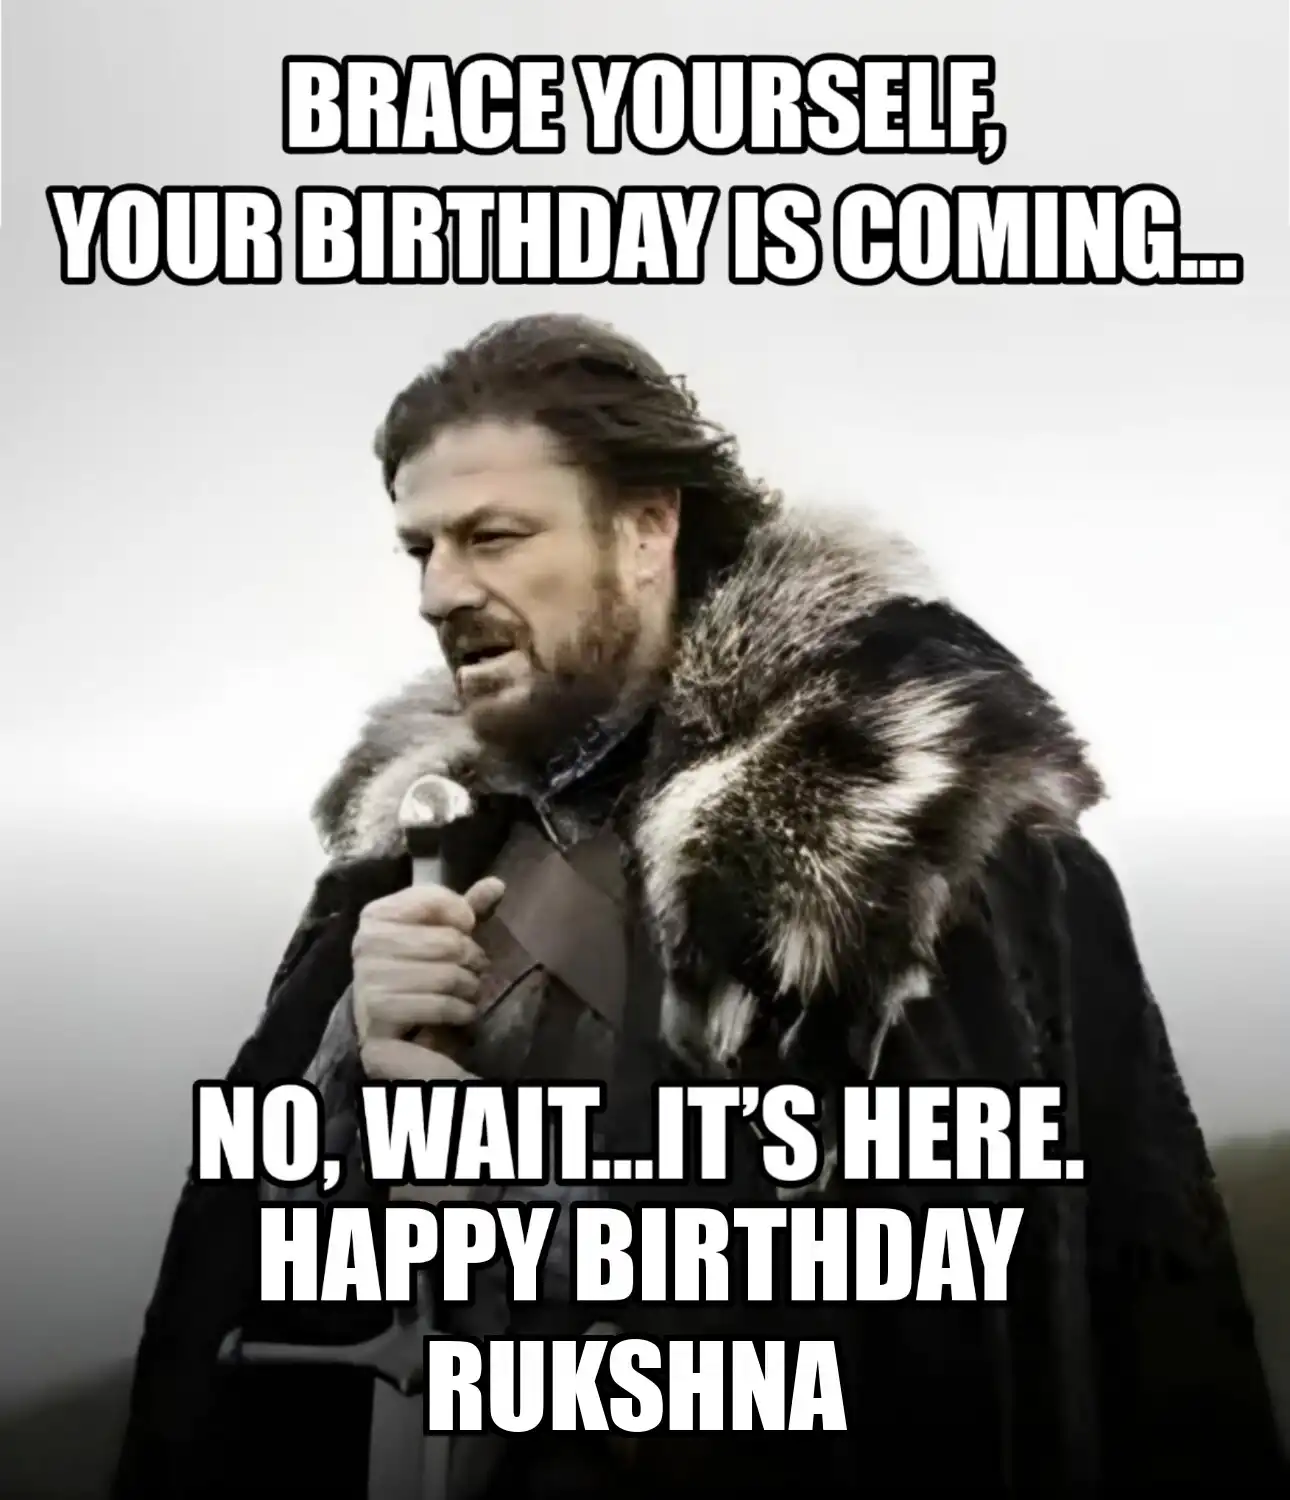 Happy Birthday Rukshna Brace Yourself Your Birthday Is Coming Meme